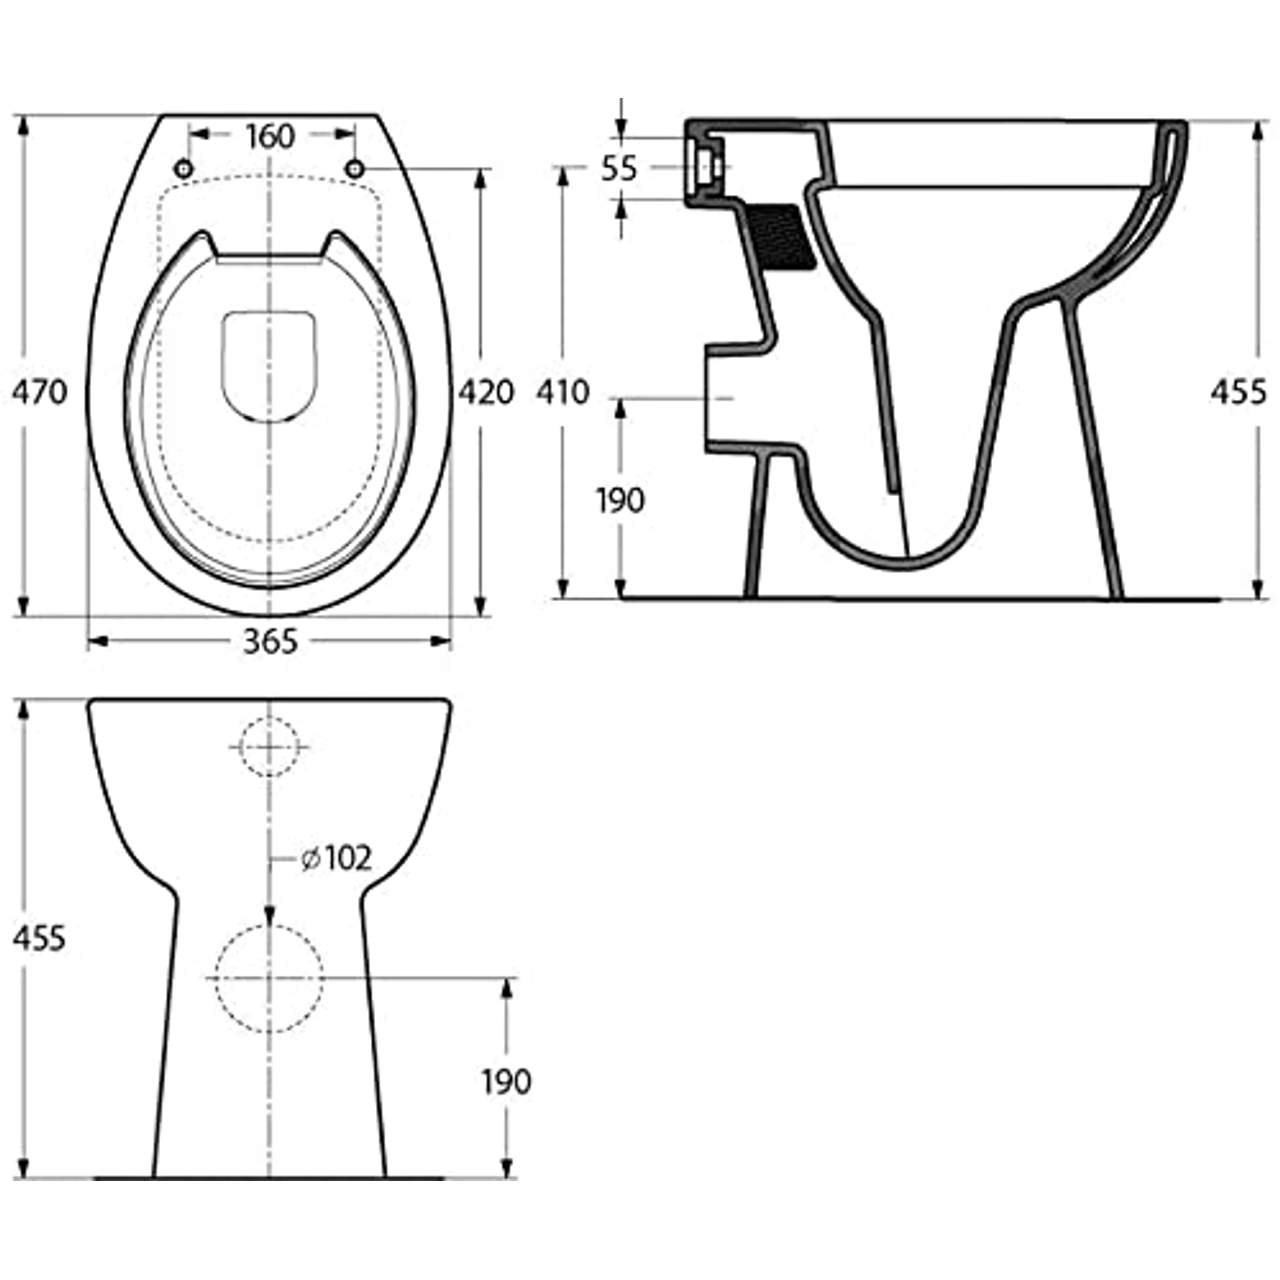 Stand Wc 6cm erhöht Spülrandlos Toilette Tiefspüler Deckel